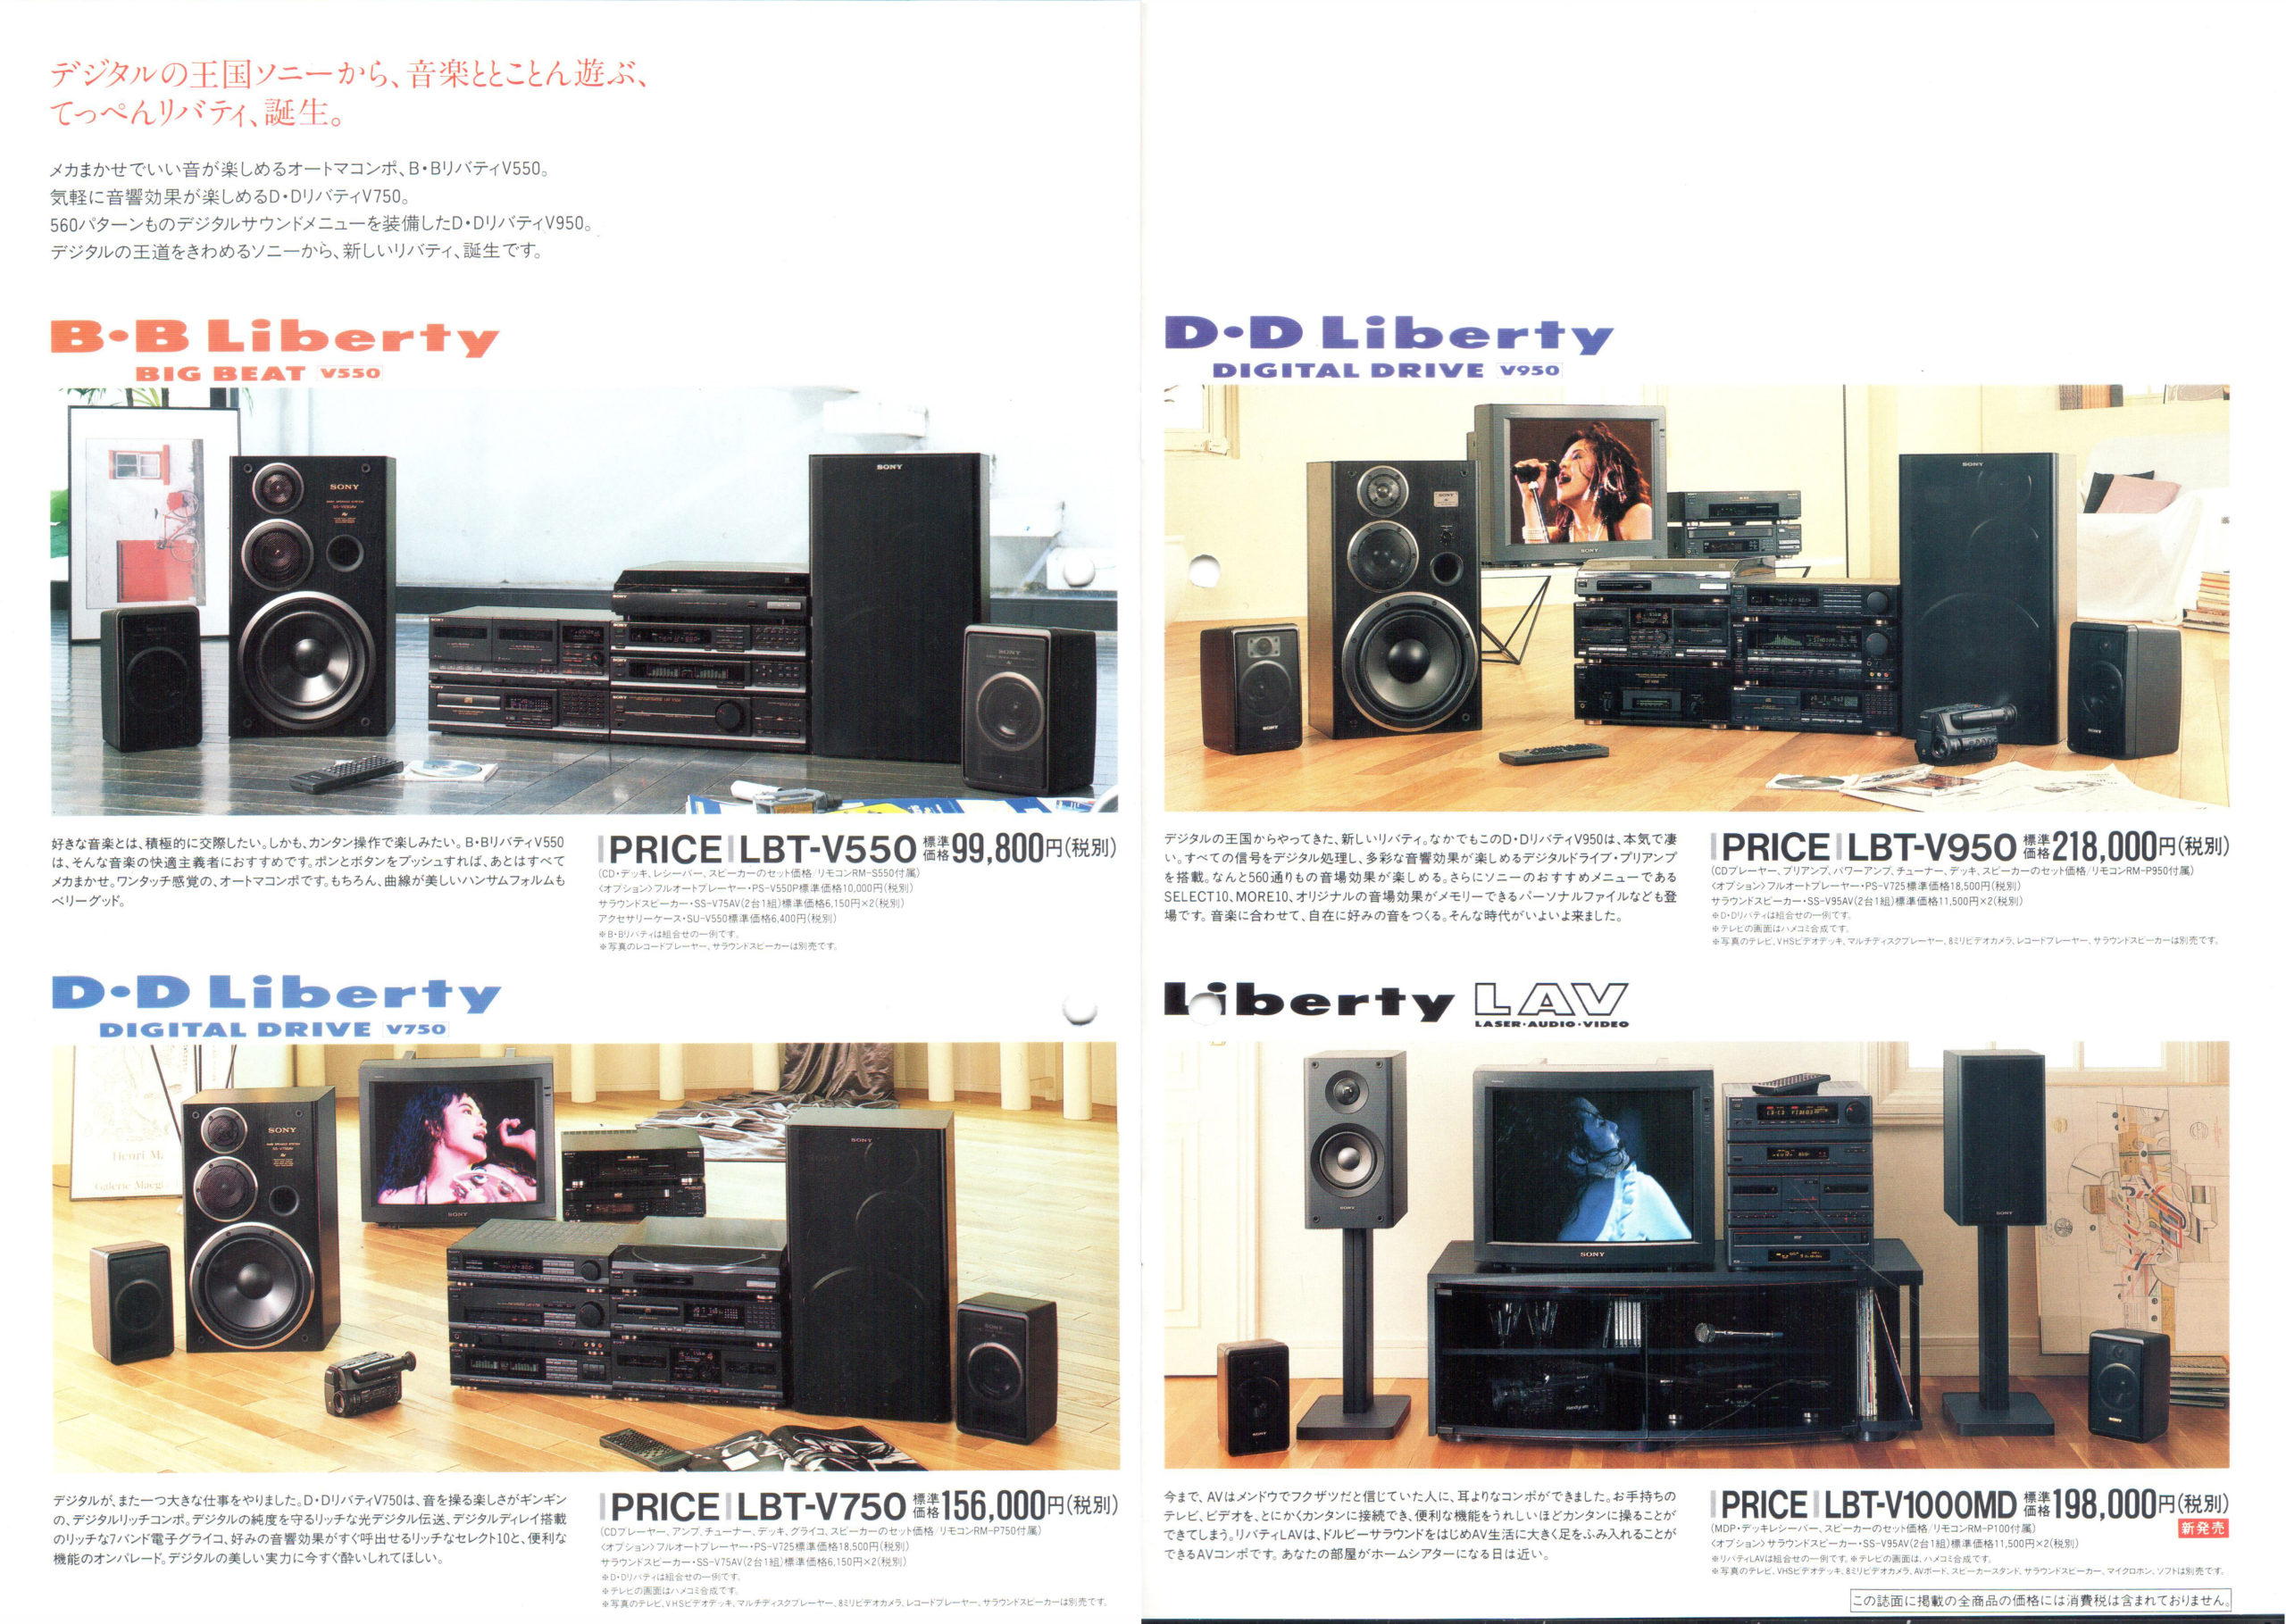 Catalog SONY PIXY 1990.02